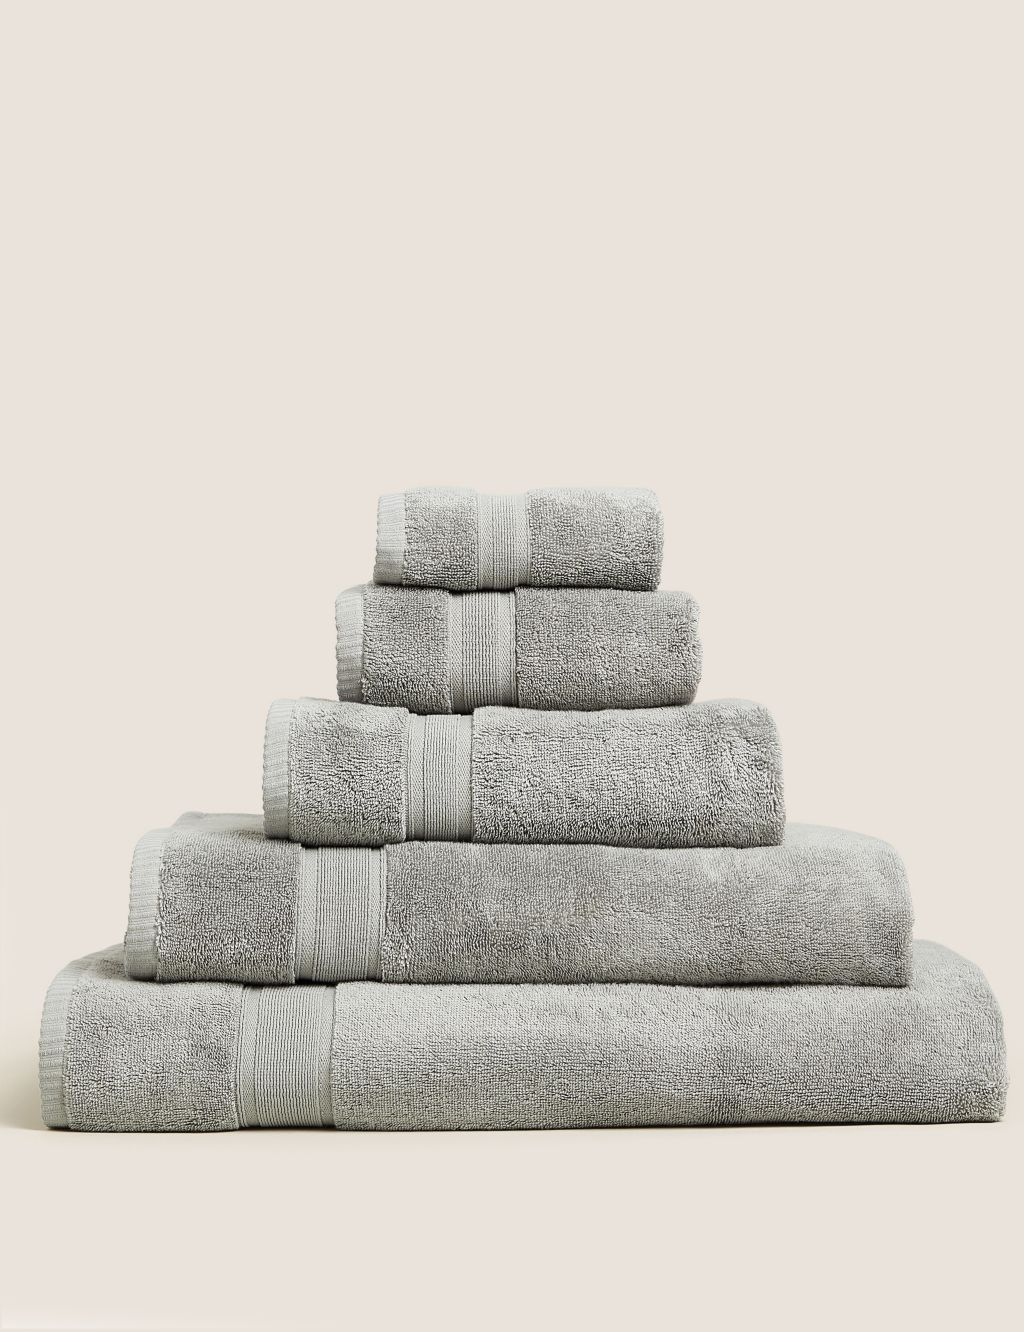 Super Soft Pure Cotton Antibacterial Towel image 2